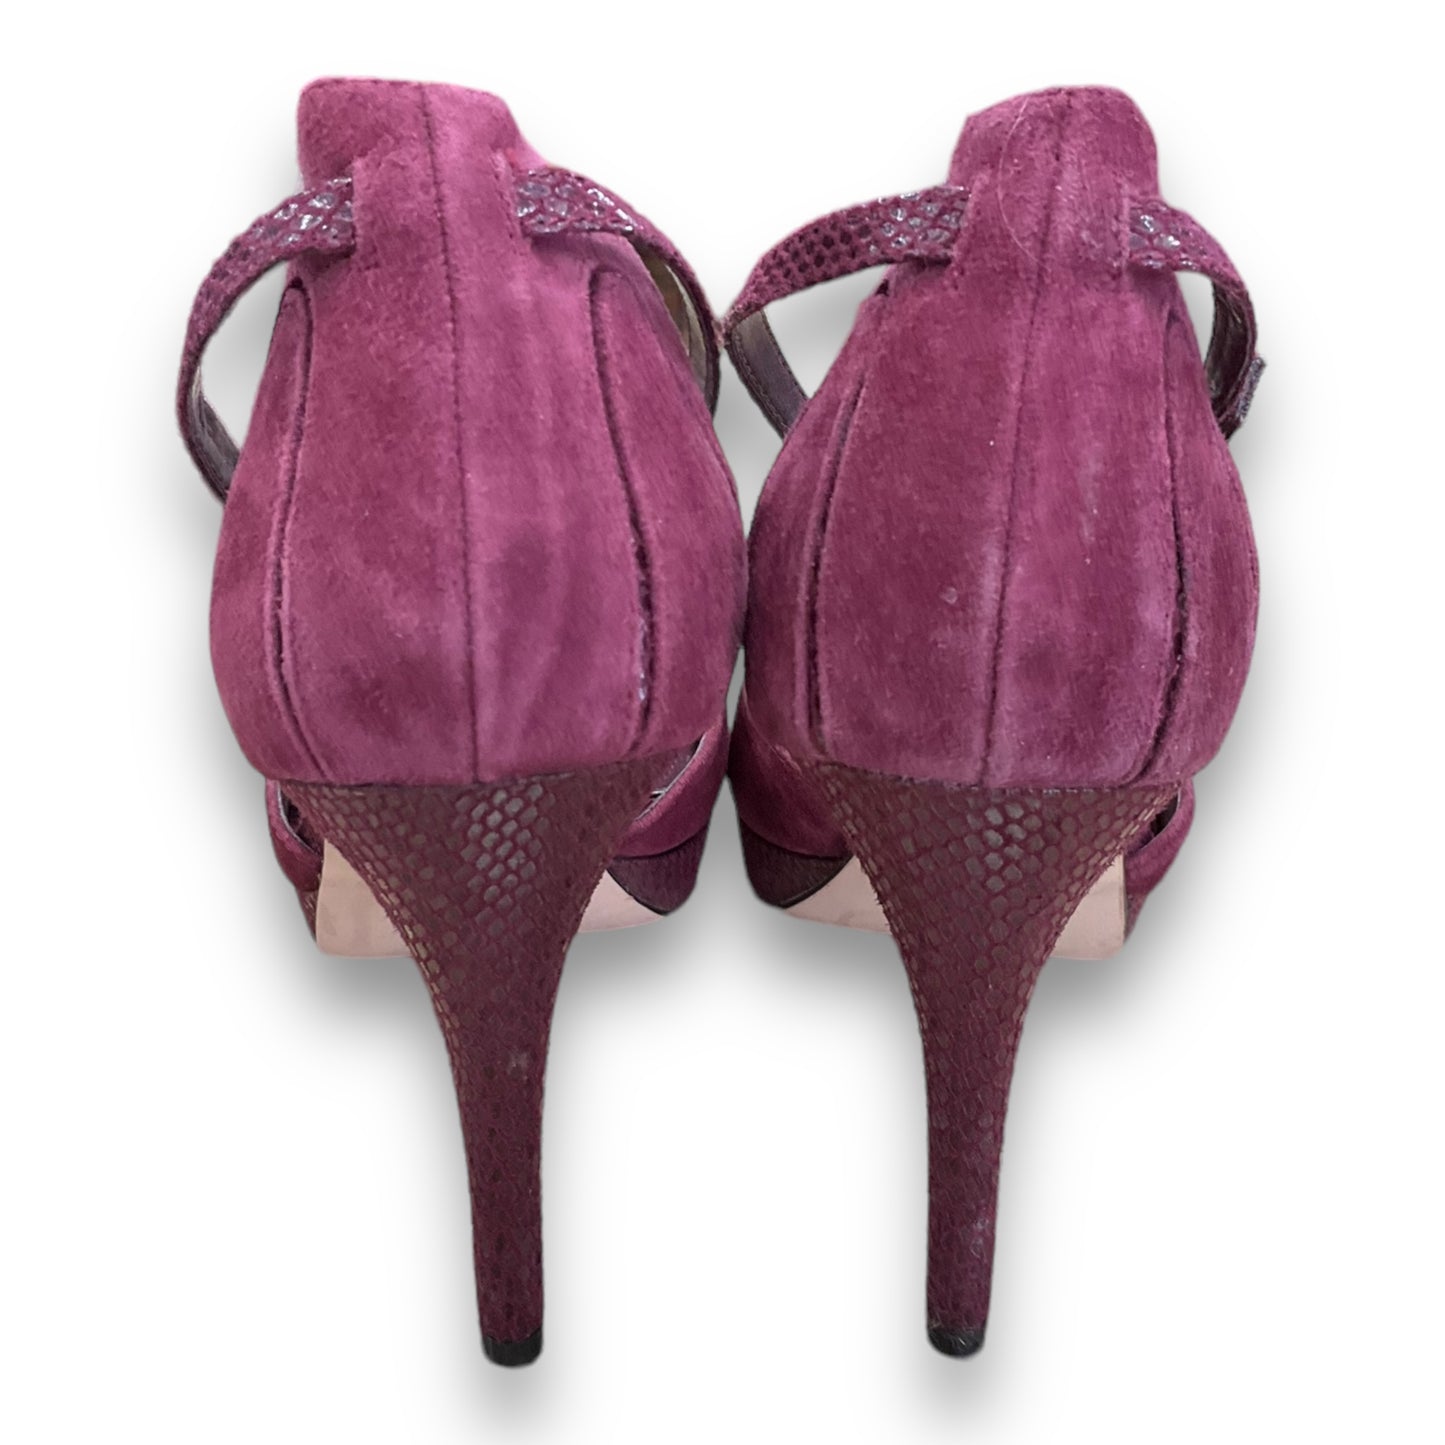 Sandals Heels Stiletto By White House Black Market O  Size: 9.5